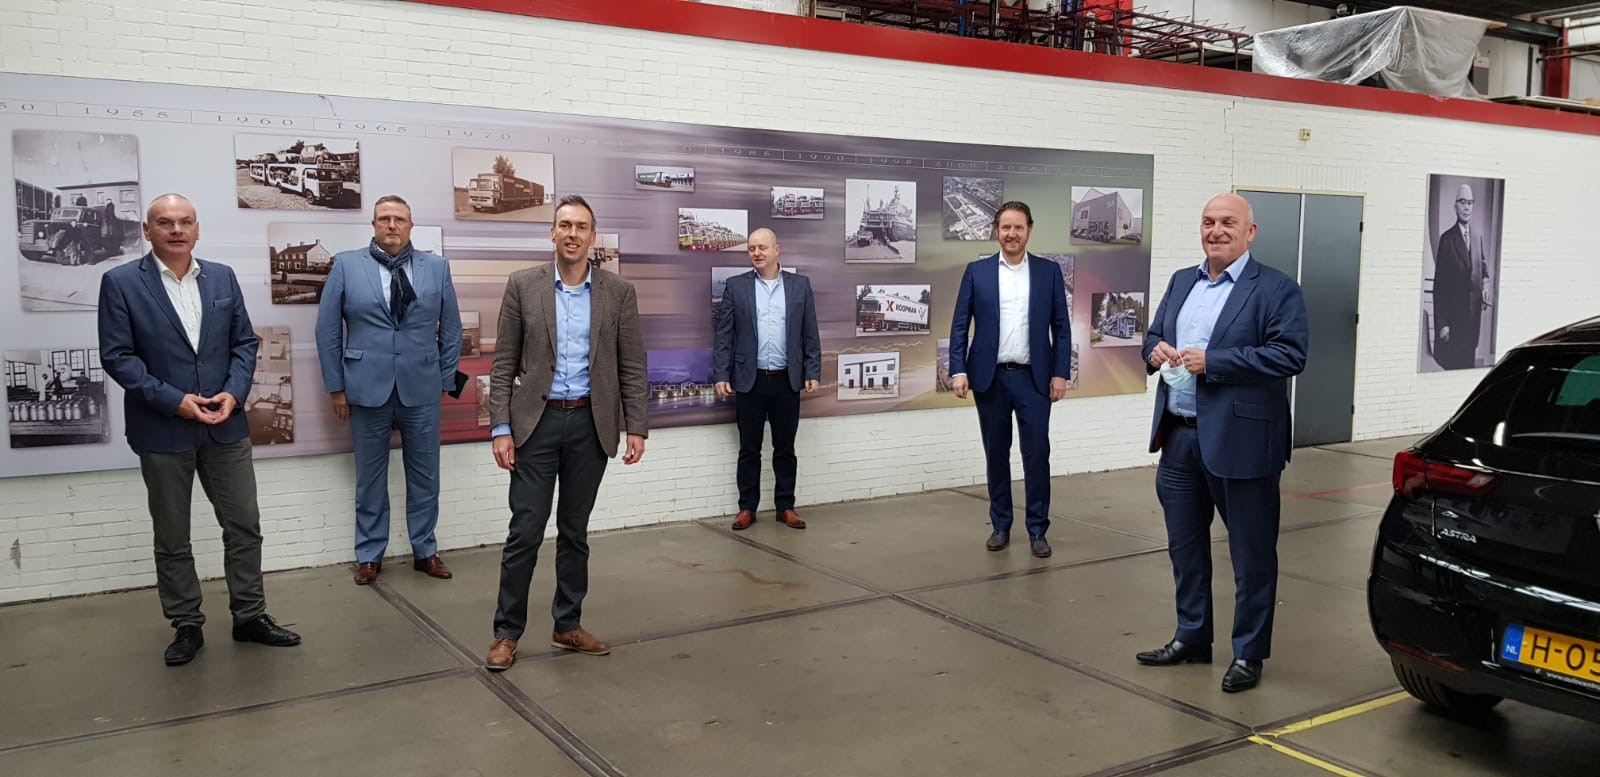 V.l.n.r. Ron van Cleef, Hugo van der Velde, Timo Aerts (BASF Coatings Services), Bart Smits, Mark van der Lingen, Willem Prinsen (Koopman Logistics)